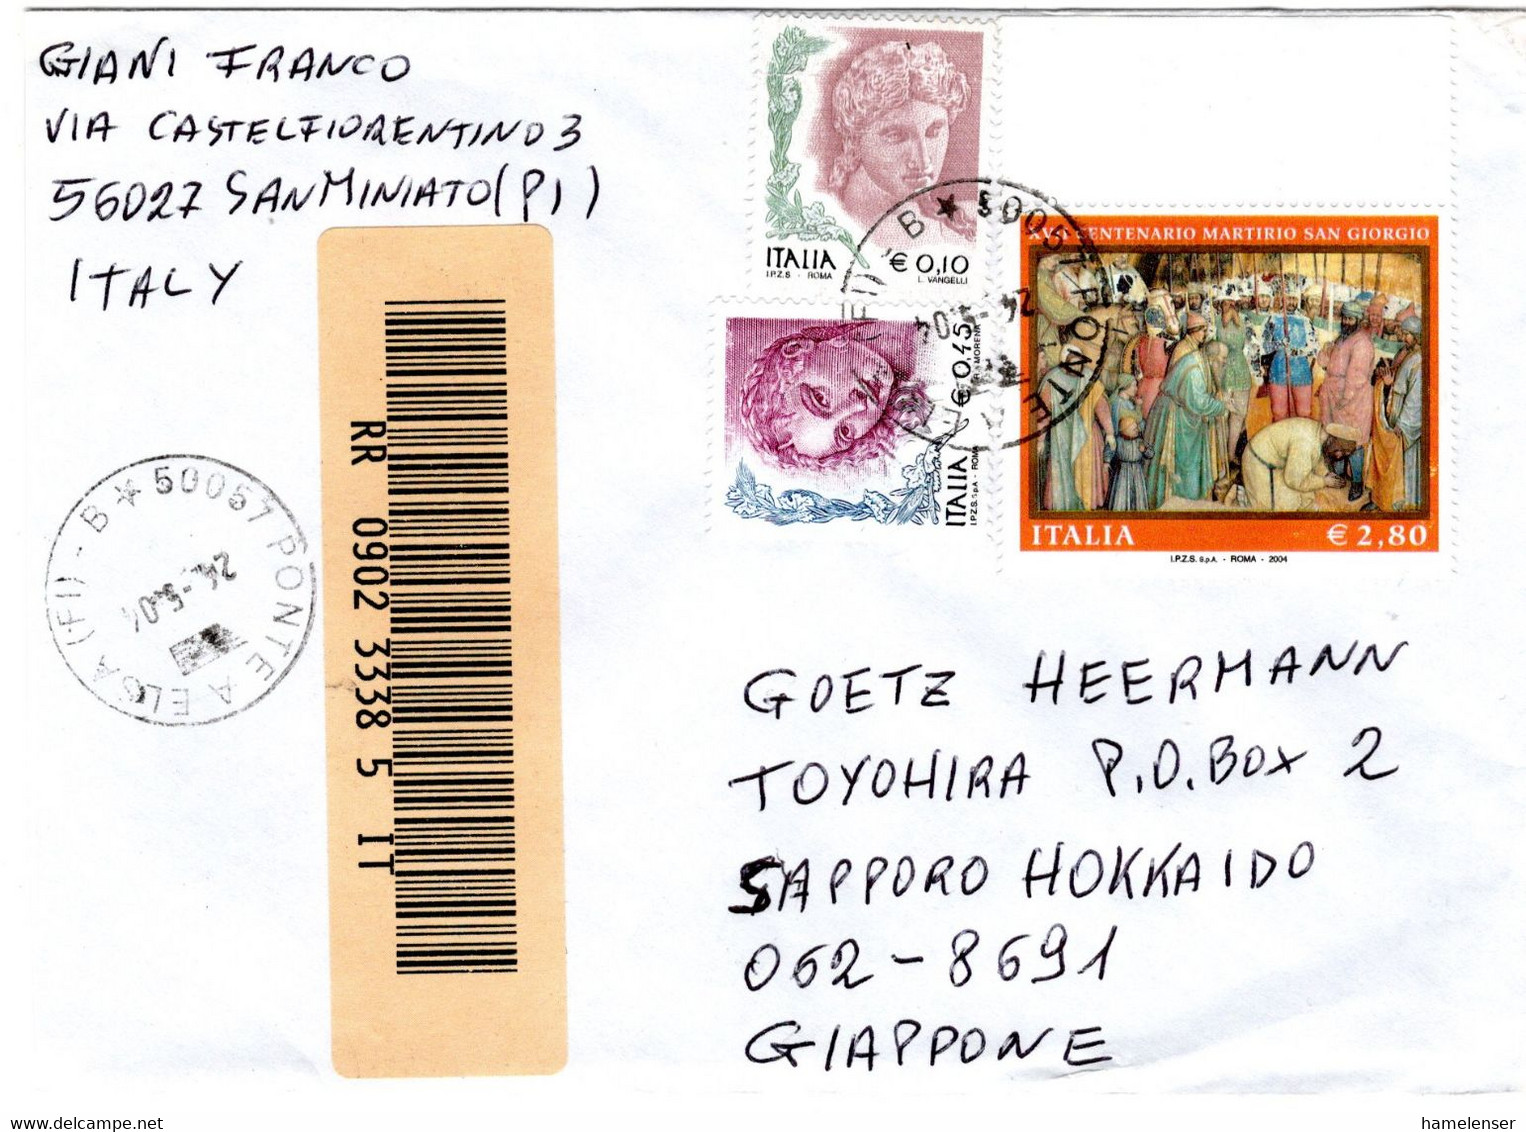 62454 - Italien - 2004 - €2,80 Hl.Georg MiF A R-LpBf PONTE A ELSE -> Japan - Christentum